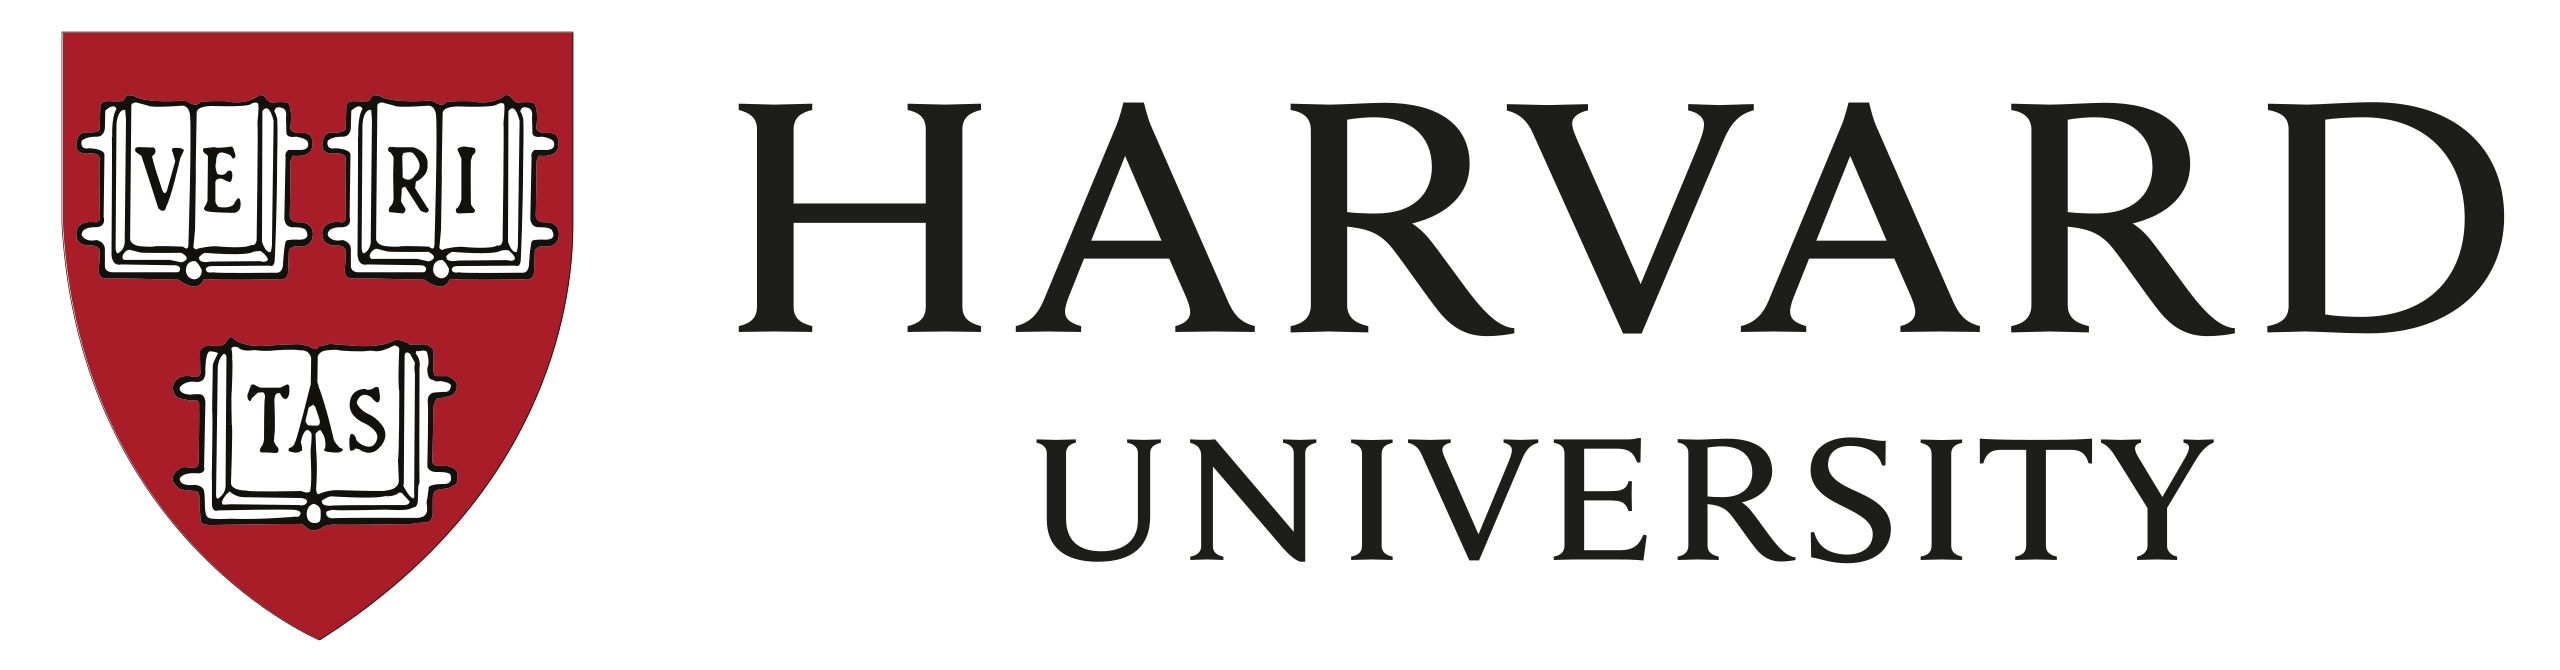 Harvard_University_logo.svg.png